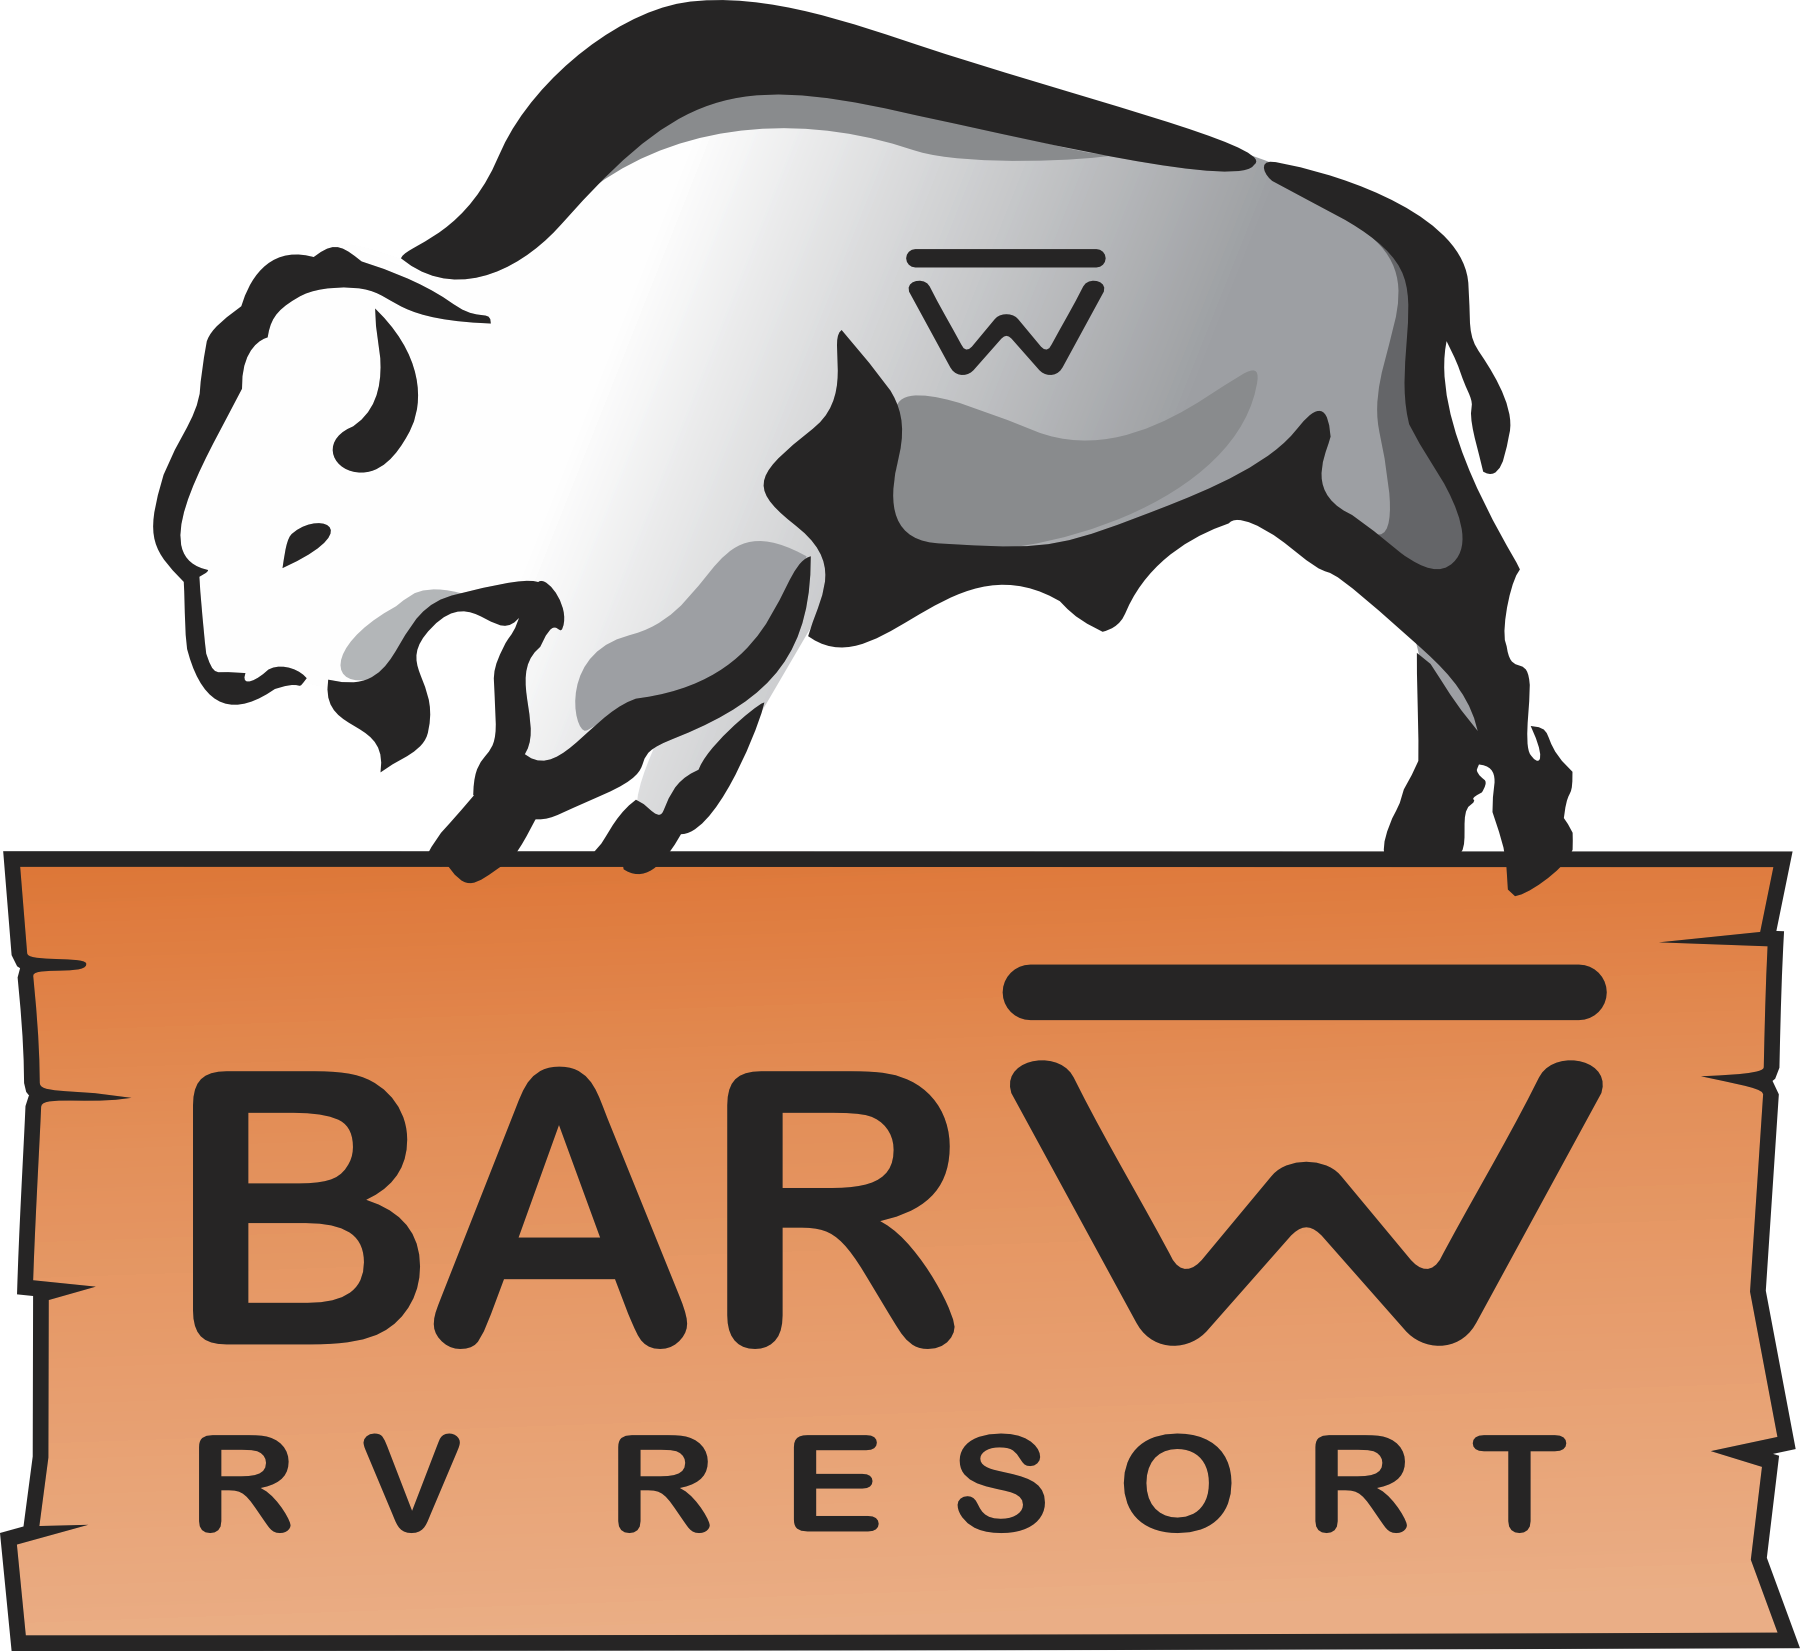 Bar W RV Resort Logo.